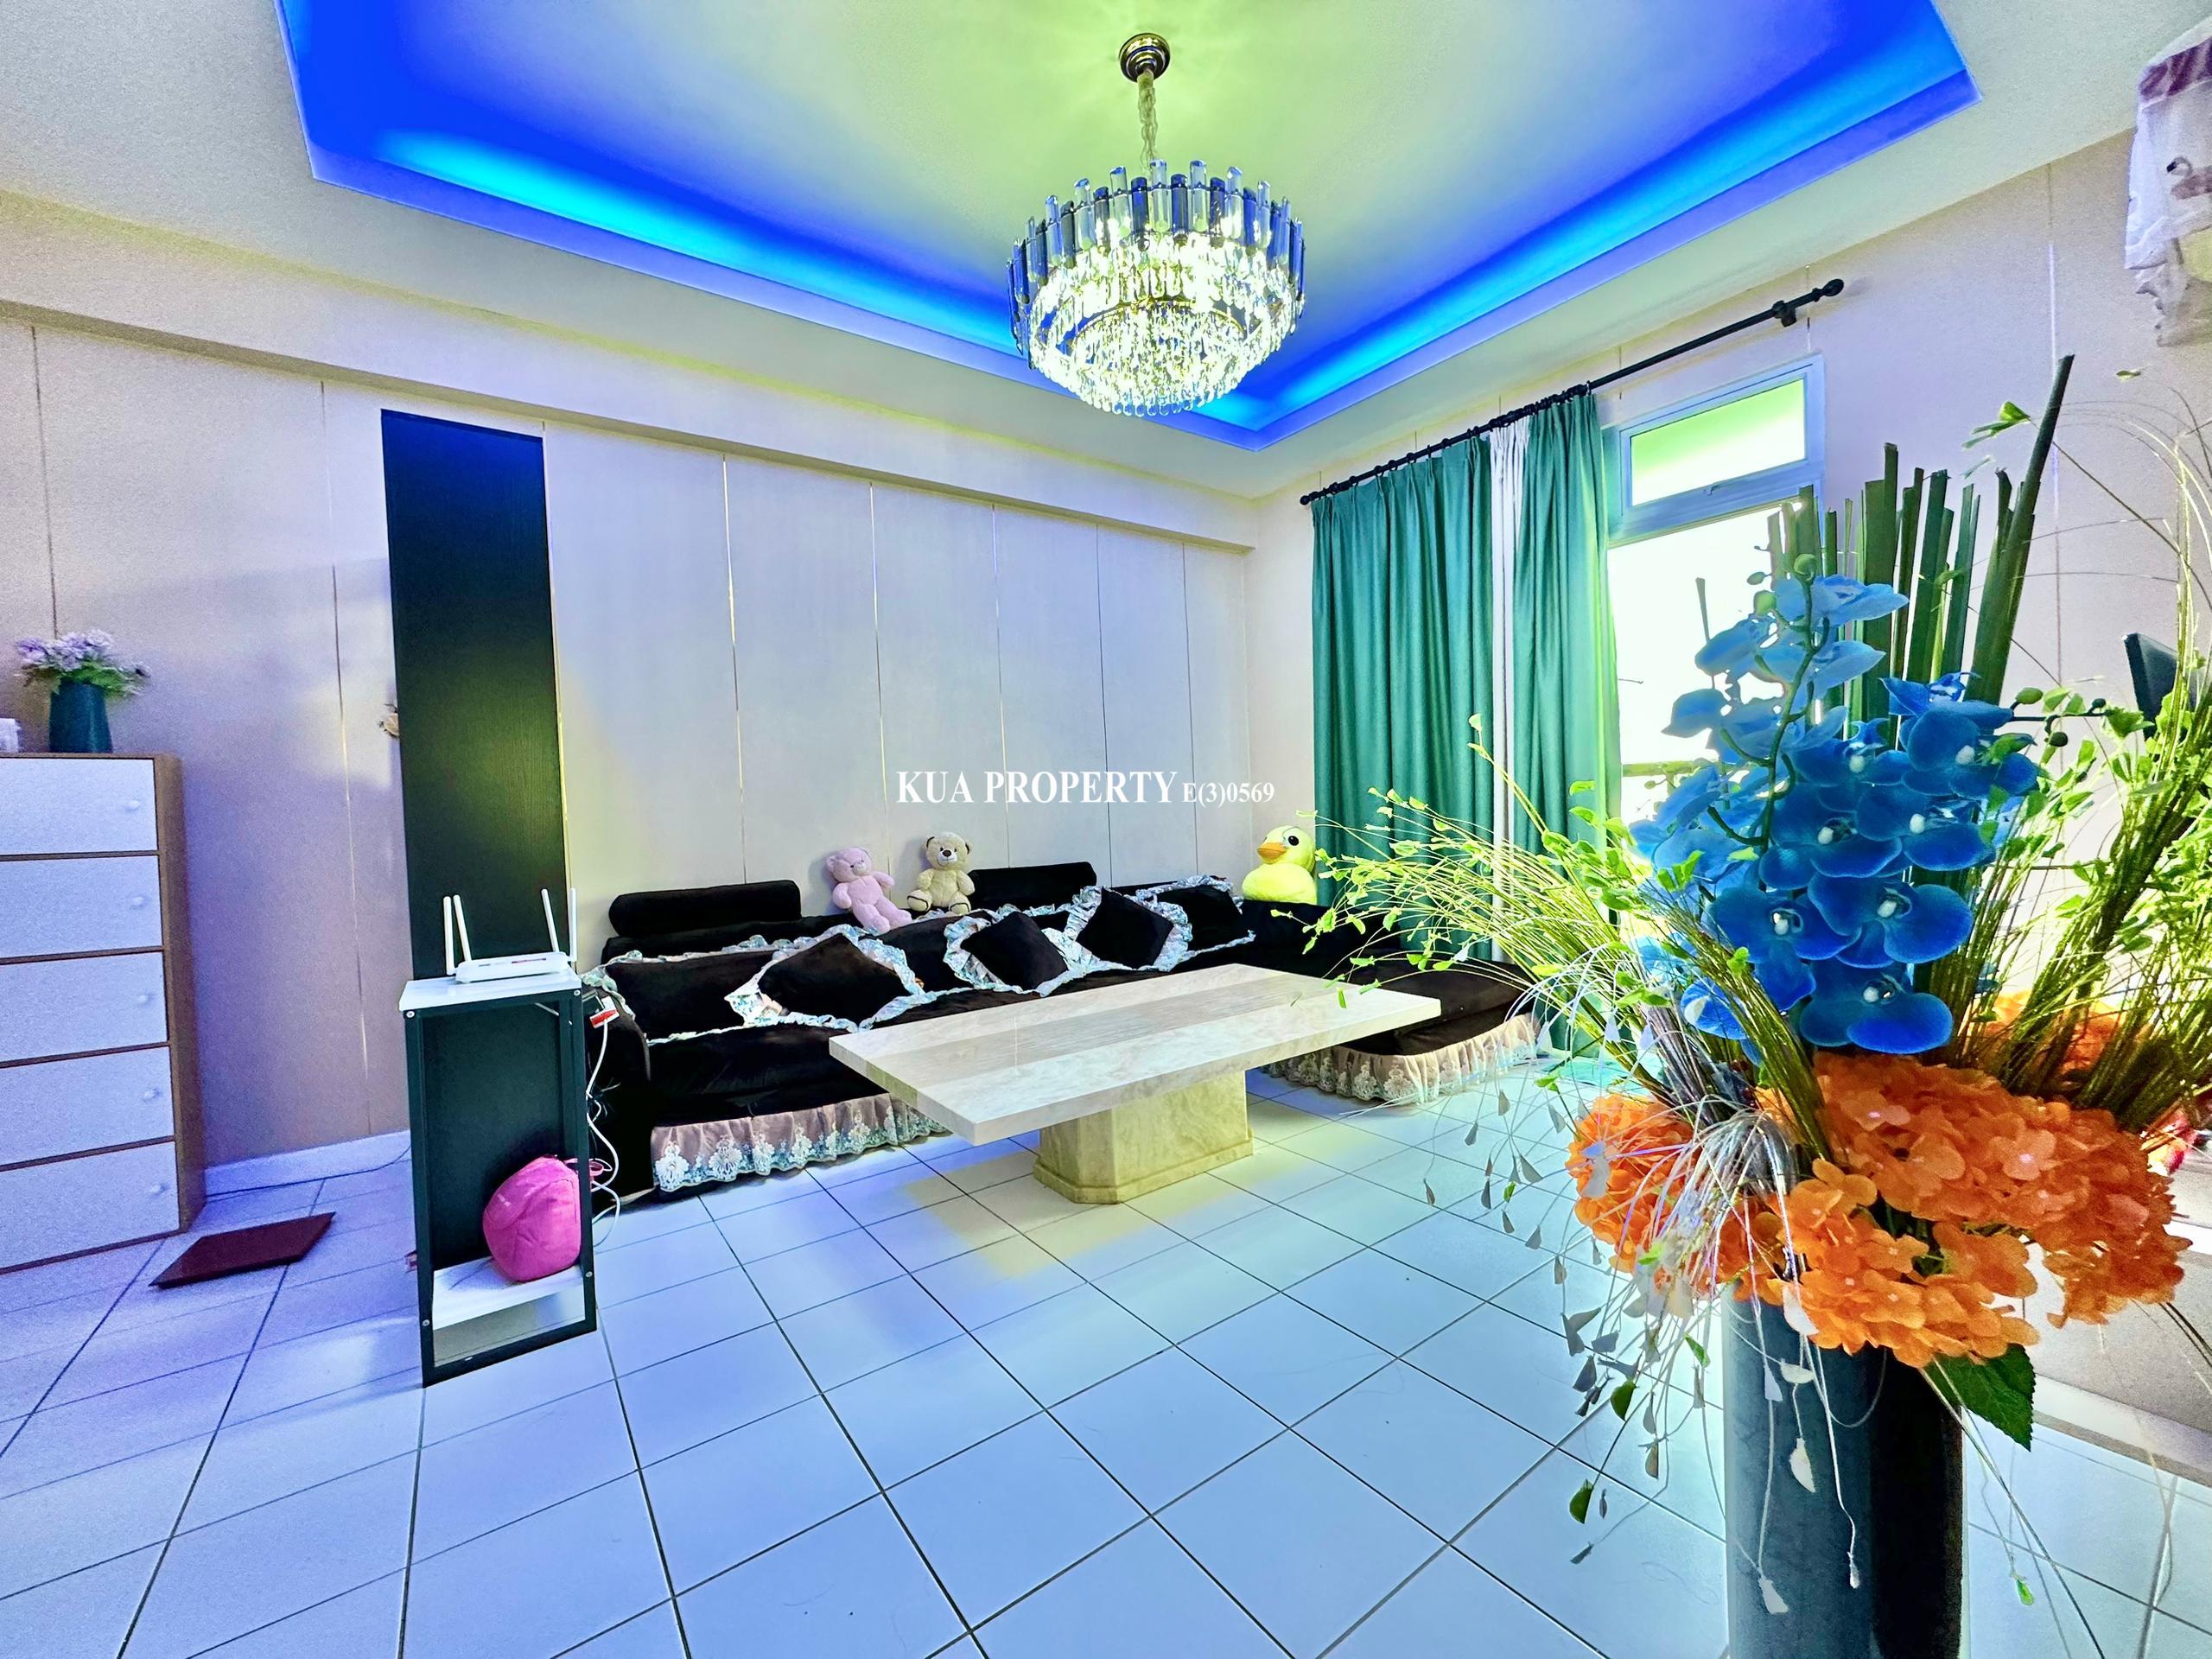 Upper Sanctuary Condominium For Sale! Located at MJC, Batu Kawa